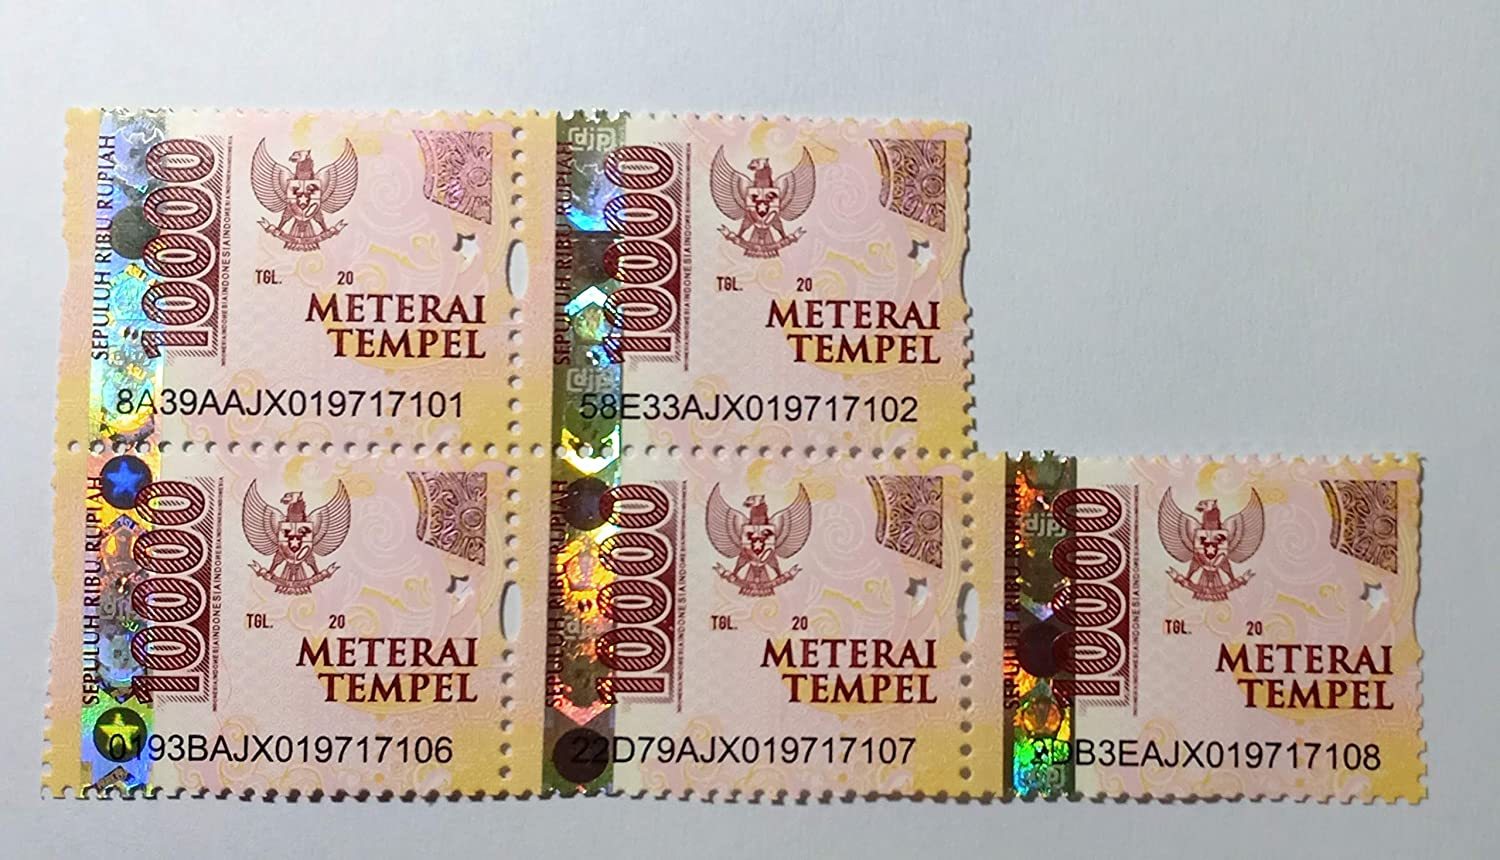 Materai Tempel 10000  - Indonesian Duty Stamp New - 5 pcs